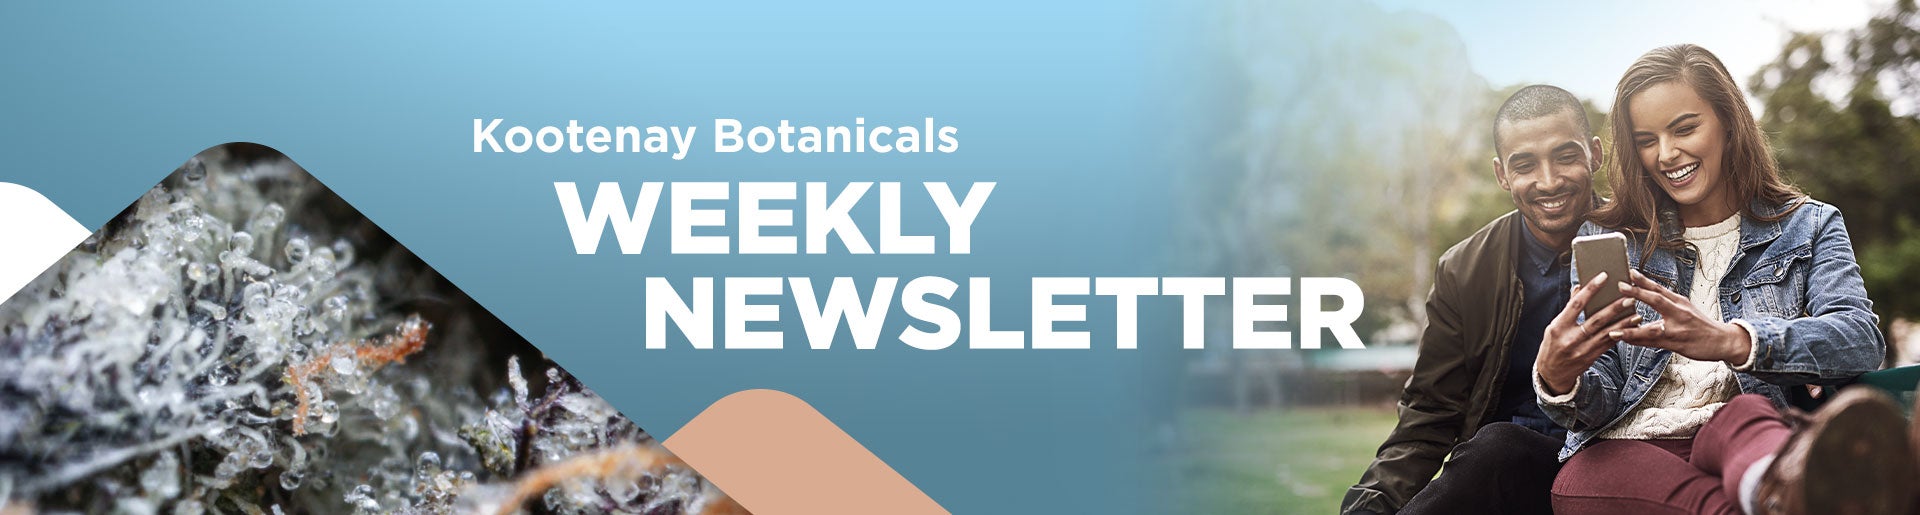 Kootenay Botanicals Weekly Newsletter